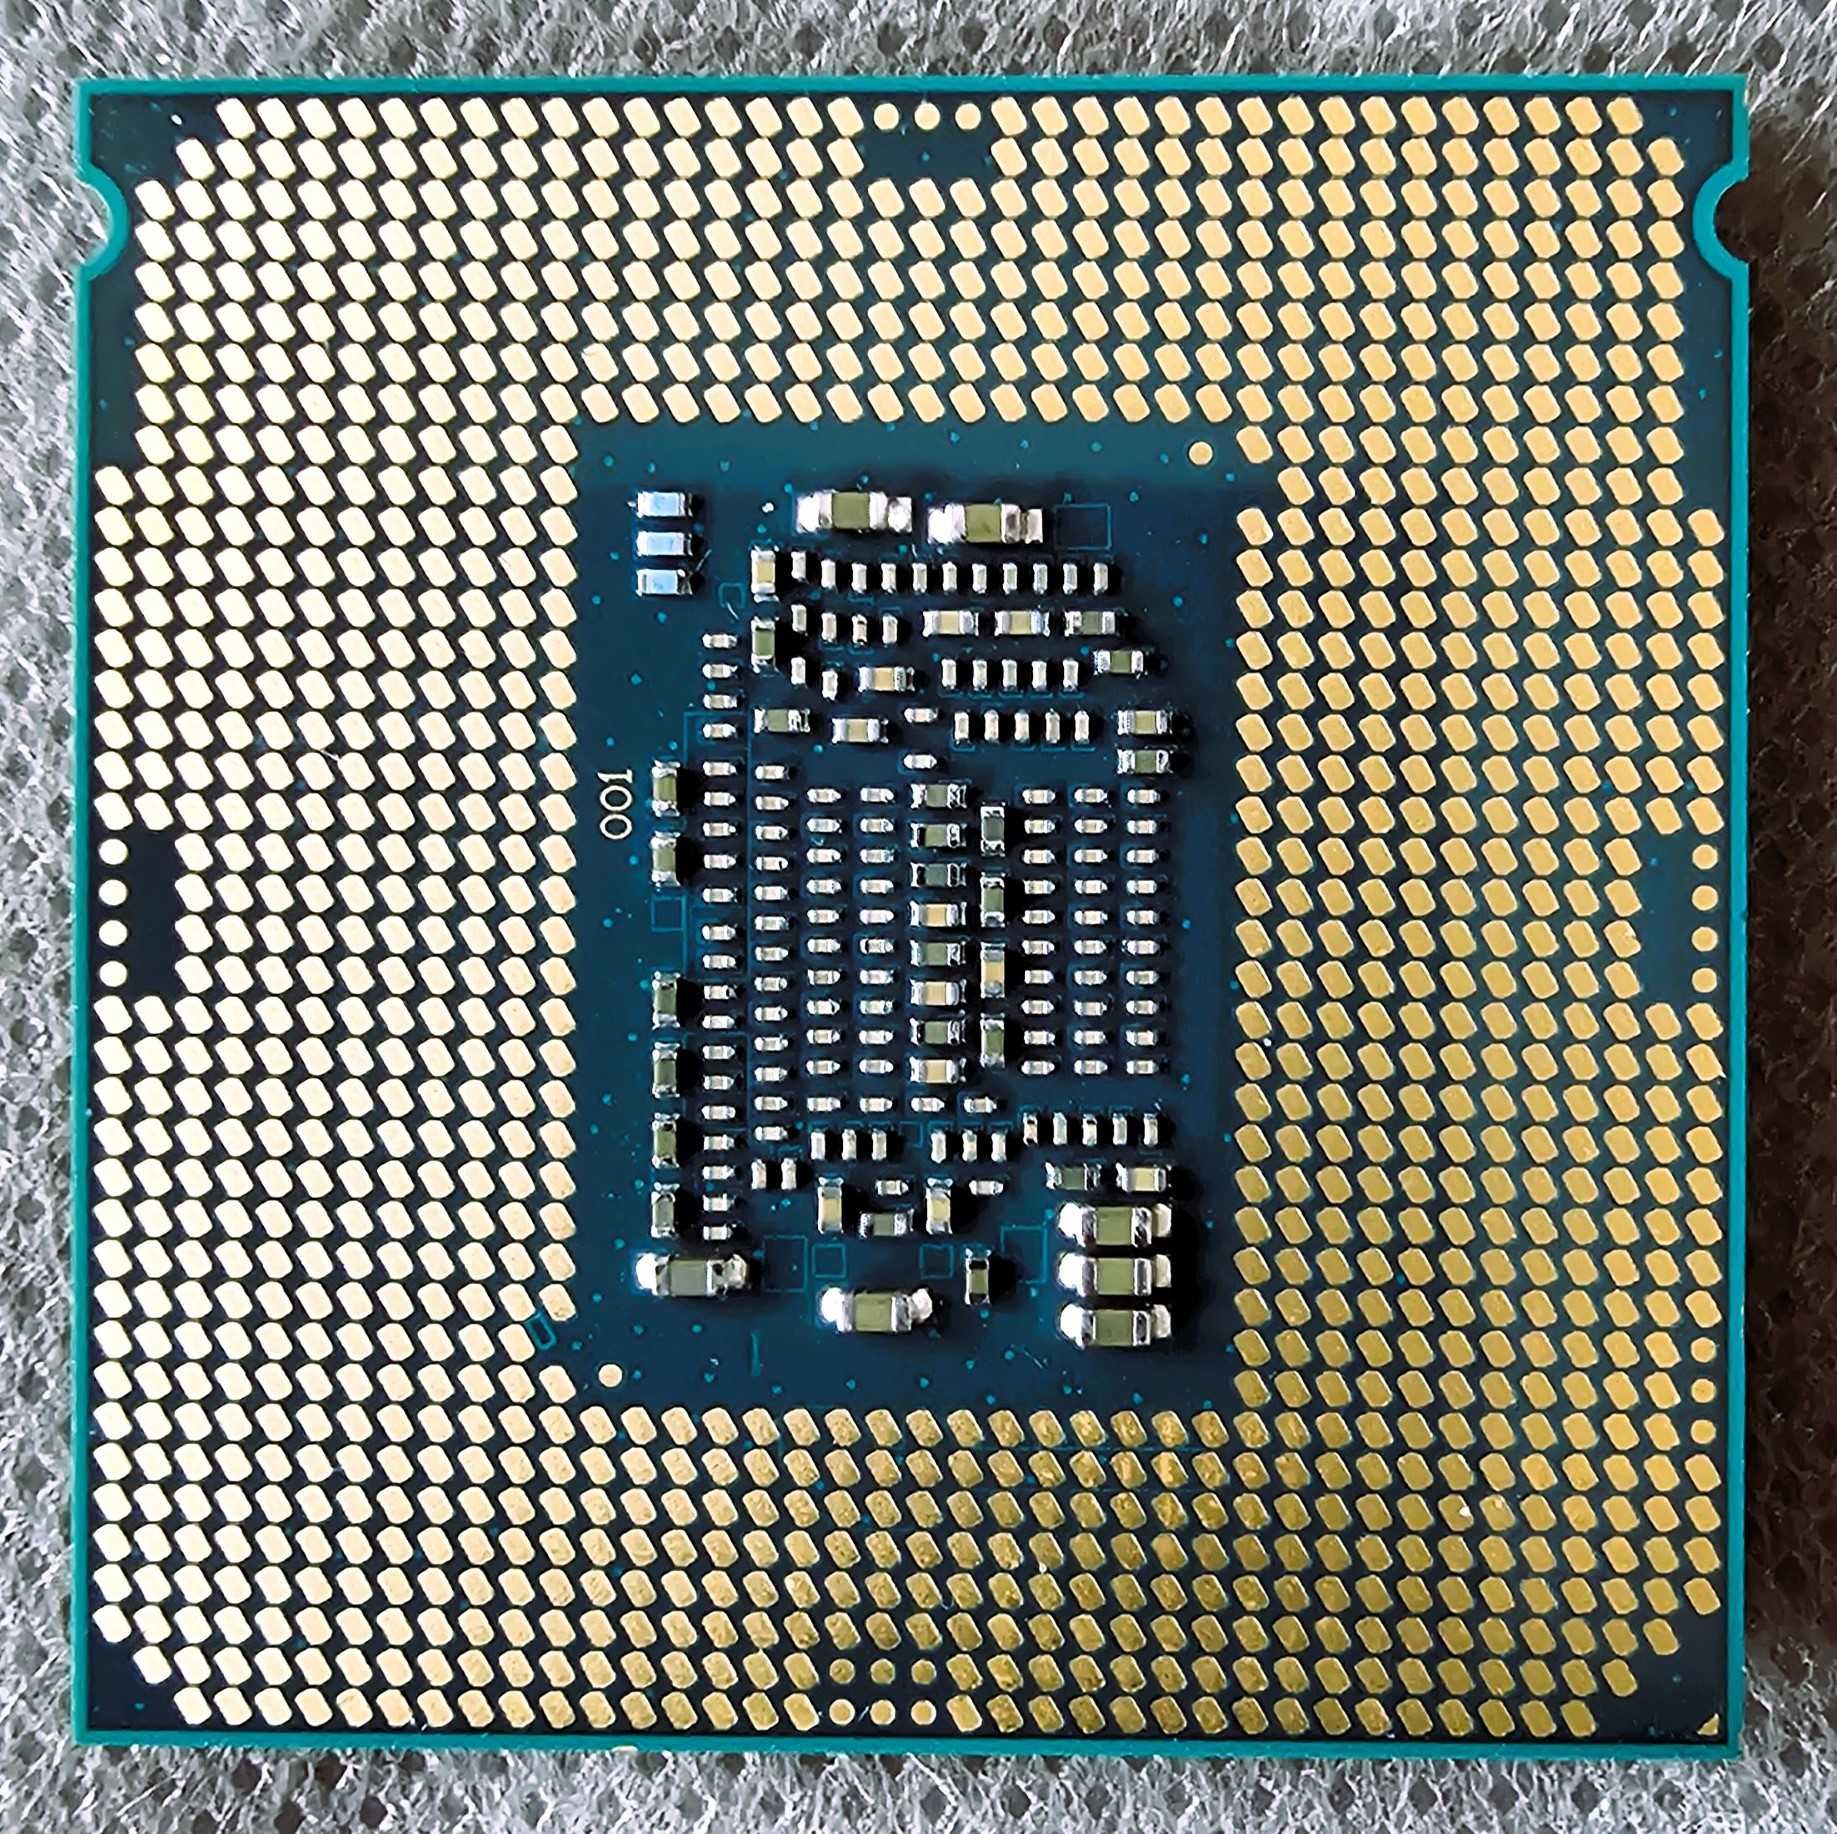 Procesor Intel i5 7400